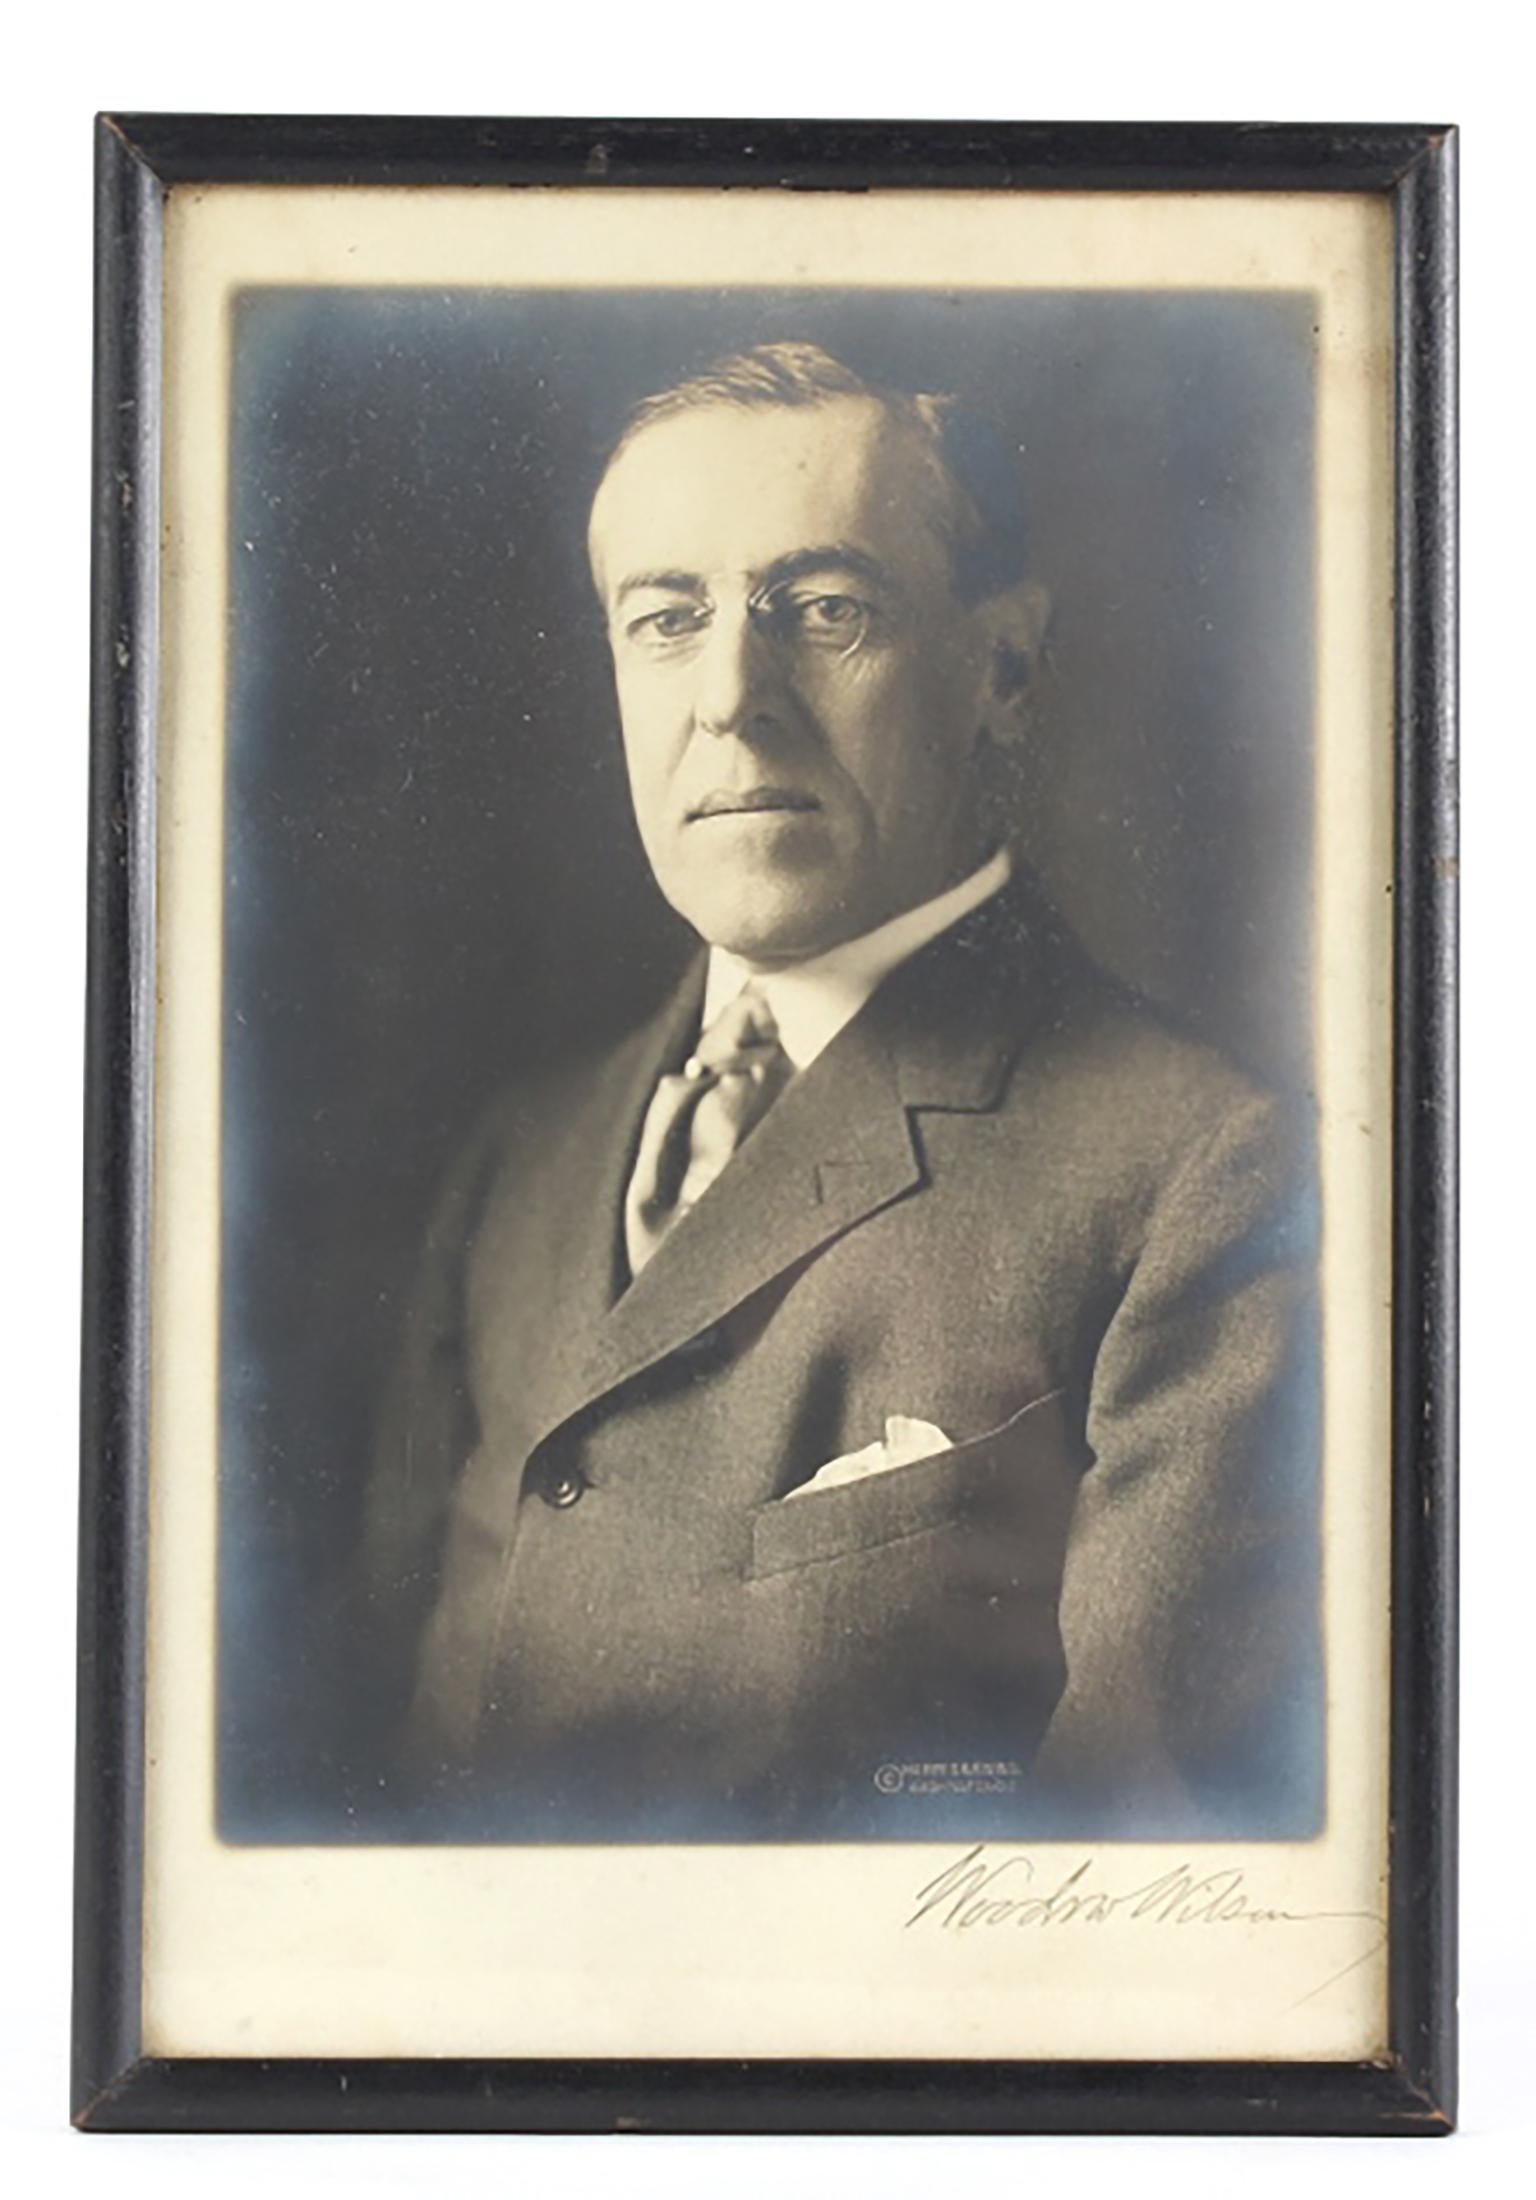 Unknown Portrait Photograph - President Woodrow Wilson Autographed Photo SIGNED